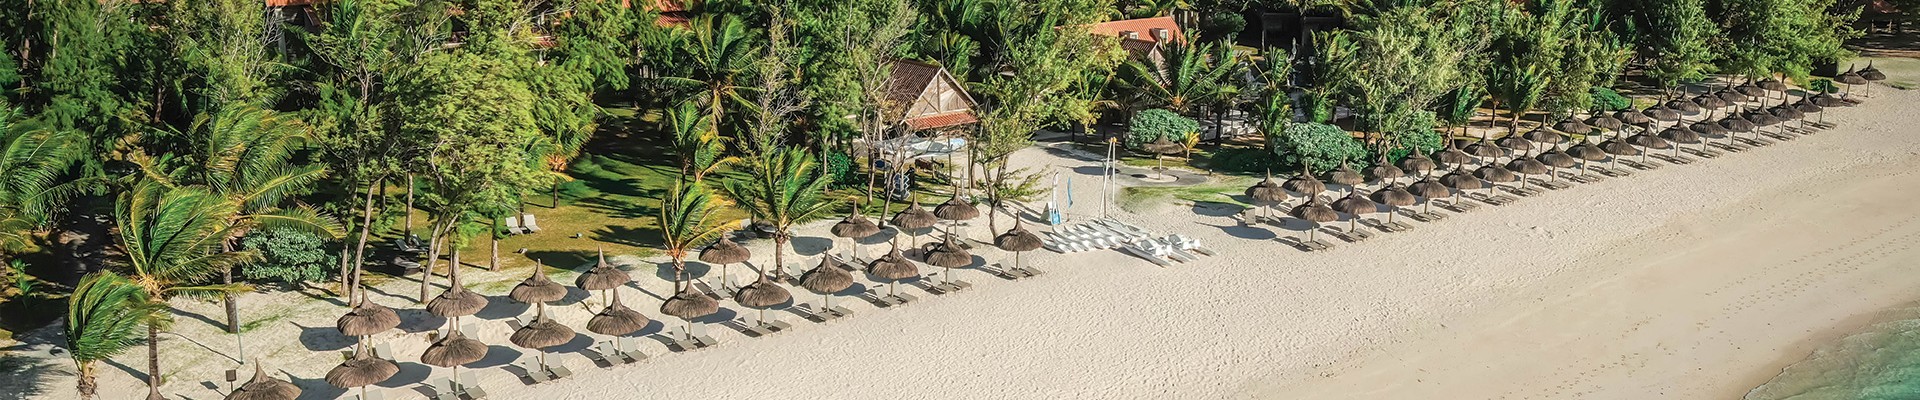 4* Maritim Crystals Beach Hotel - Mauritius Package (6 nights)